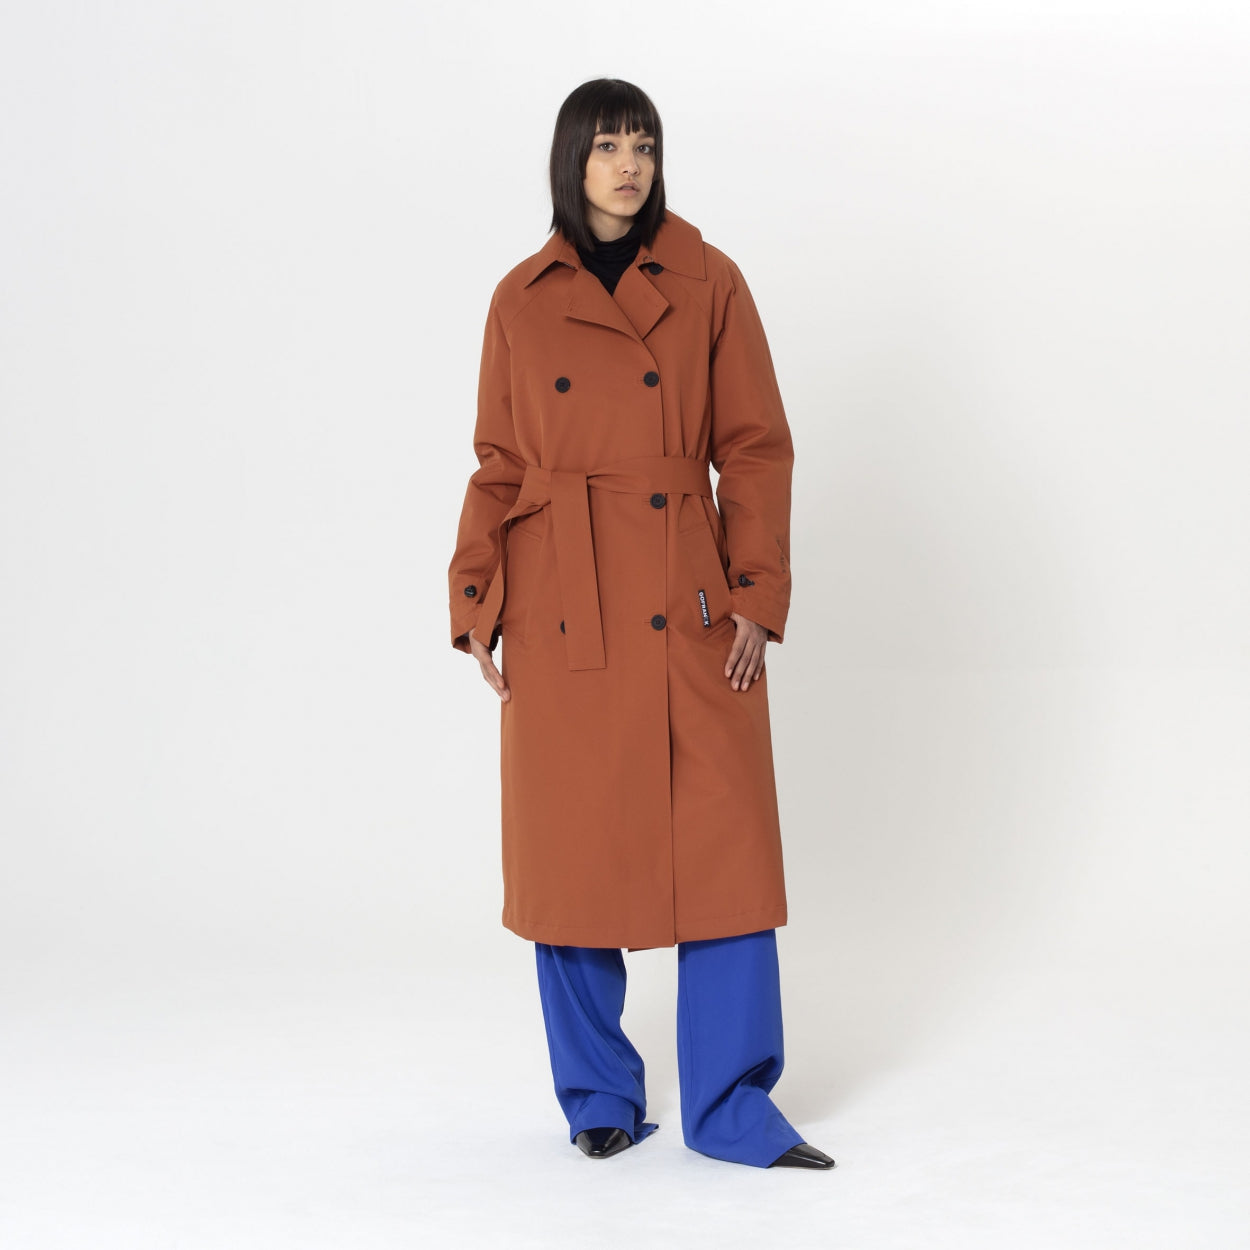 Gale GOFRANCK jacket 2023-2024 womens waterproof winter jacket product image